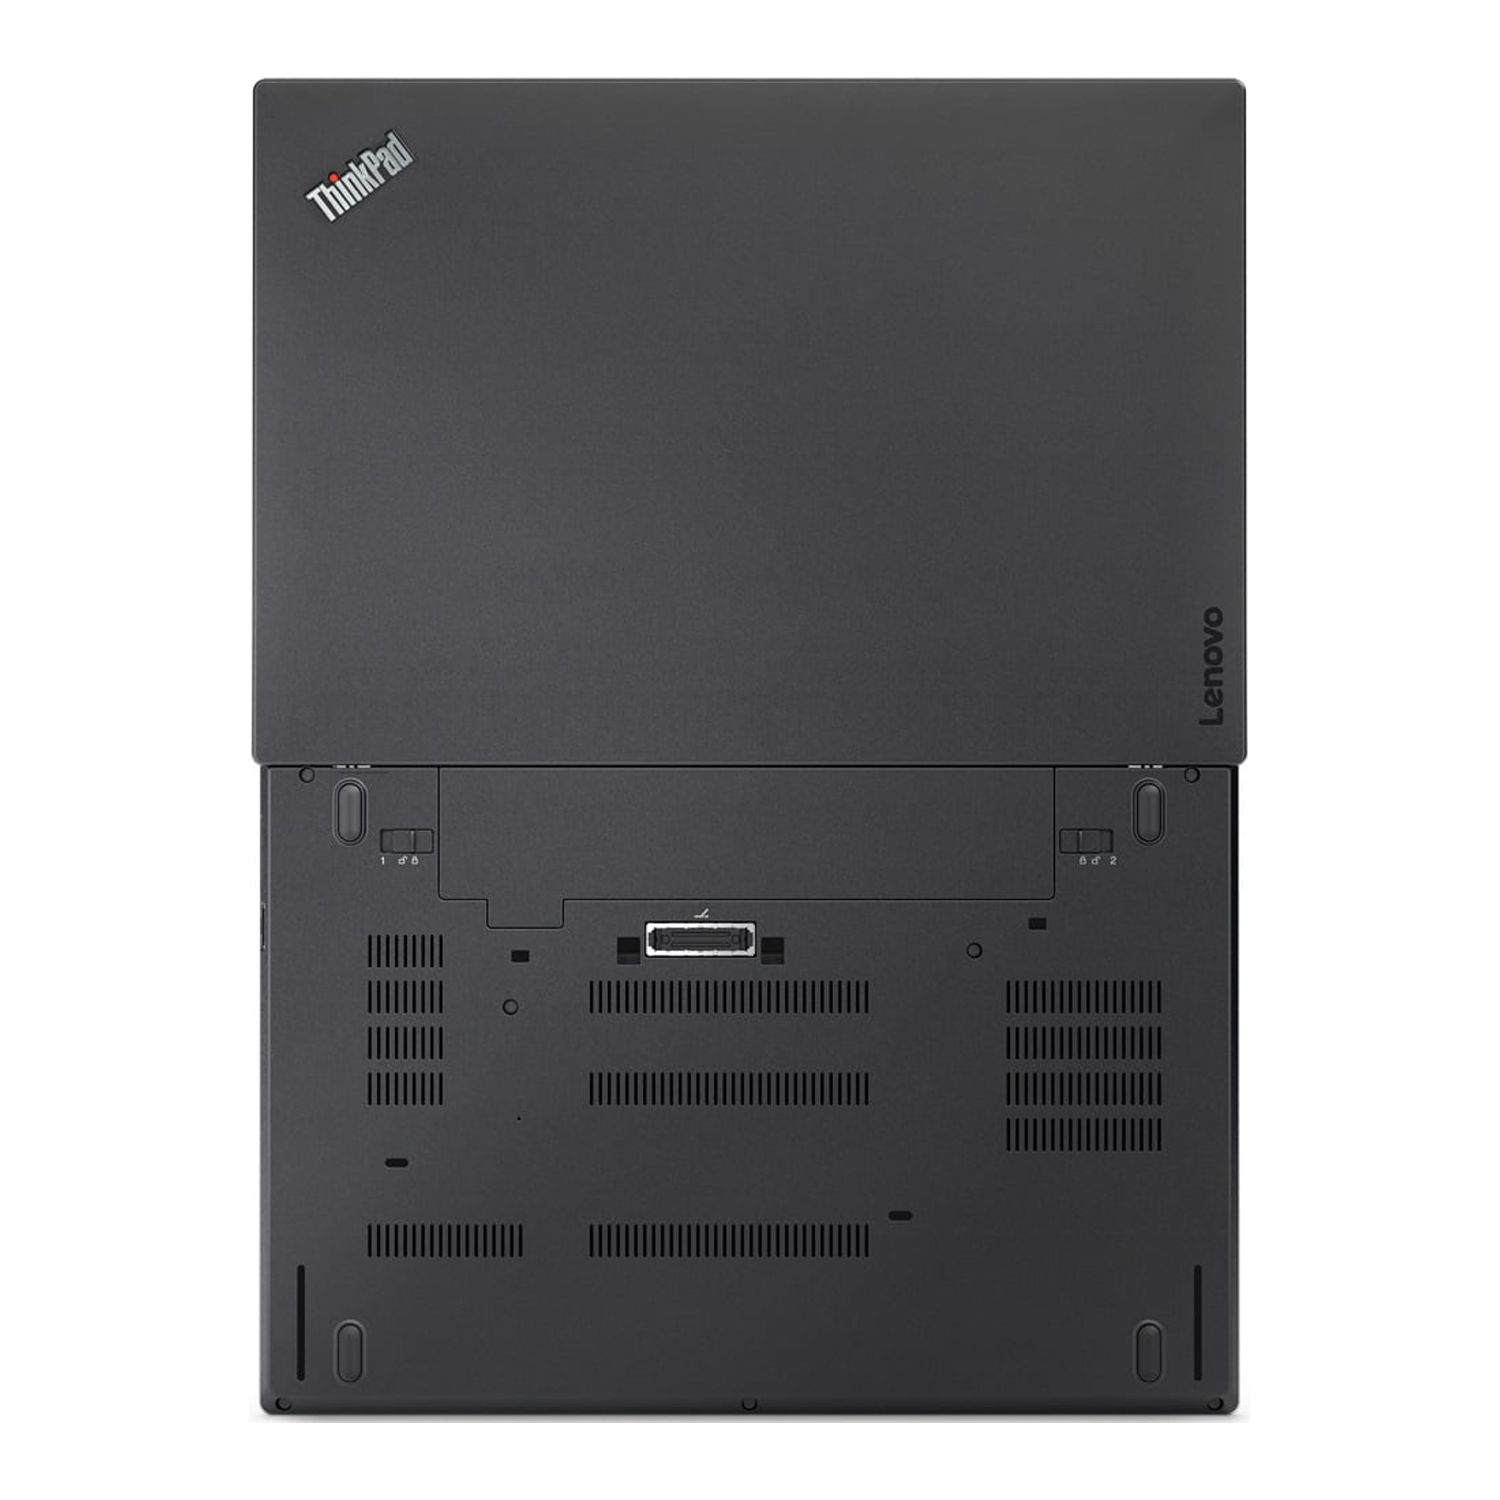 Lenovo ThinkPad X270 - 12.5" - Core i5 6200U - 8 GB RAM - 500 GB HDD - image 4 of 4